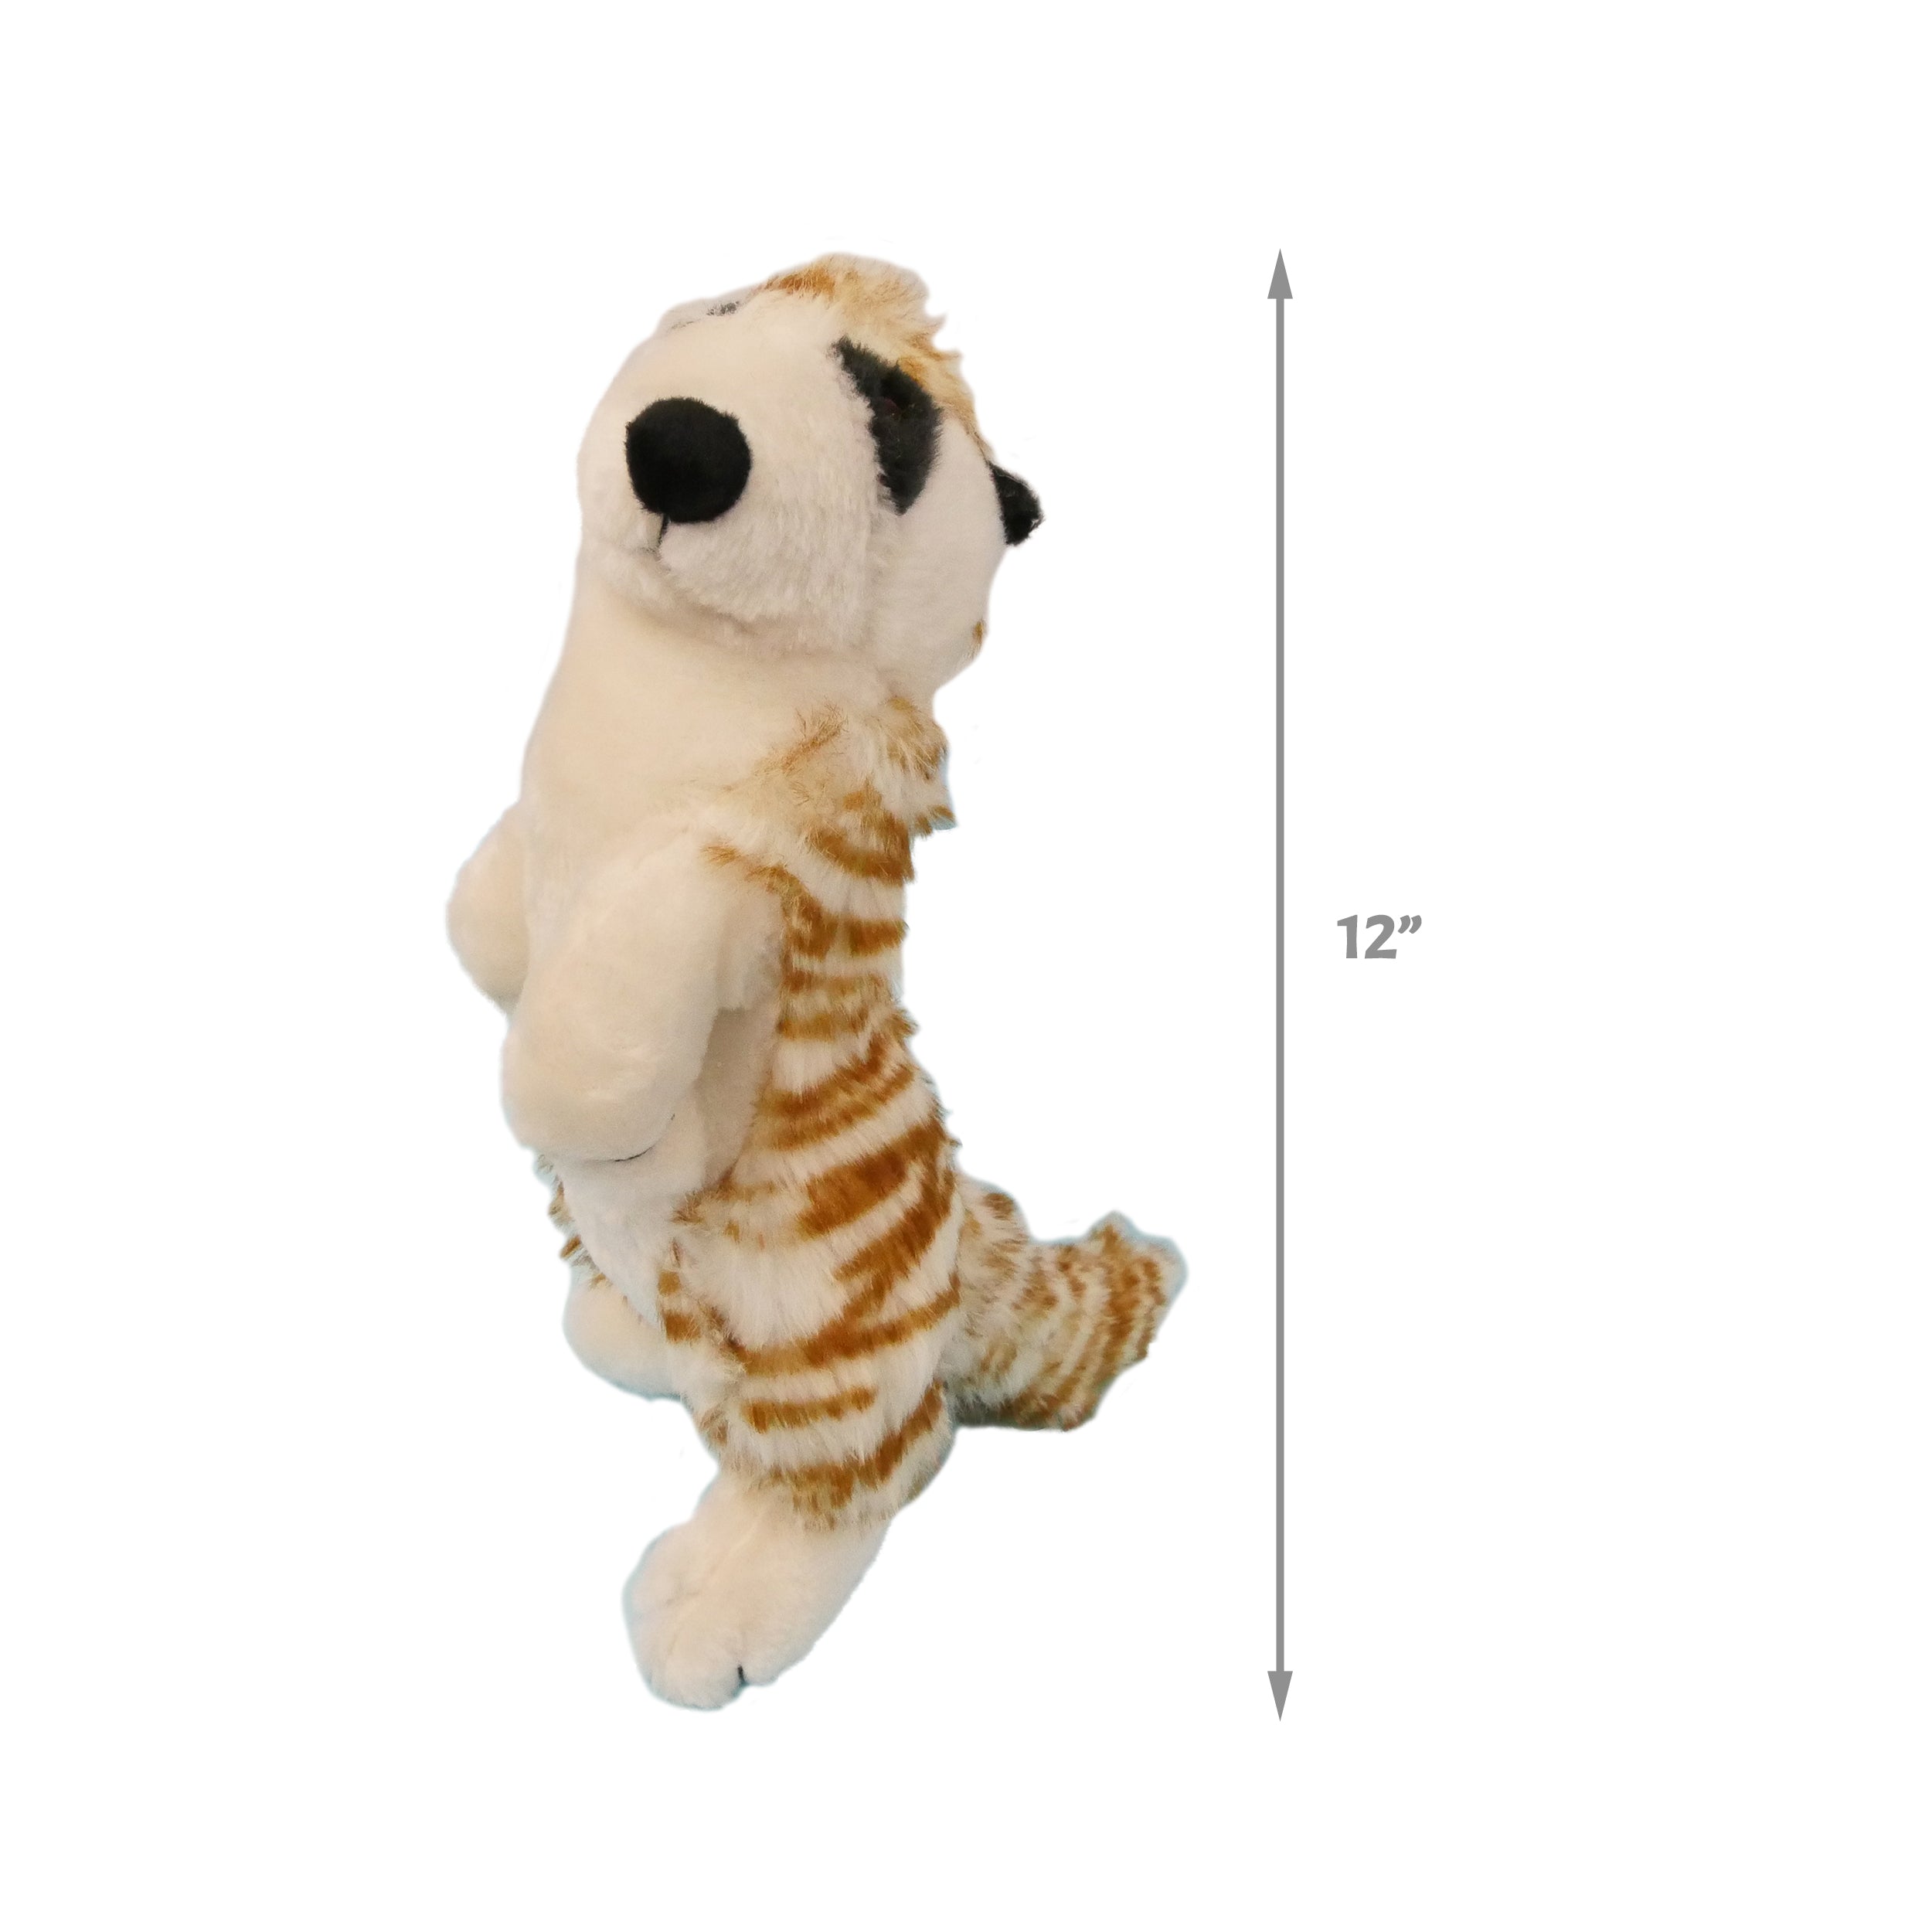 [Dog toy] Plush Standing Meerkat